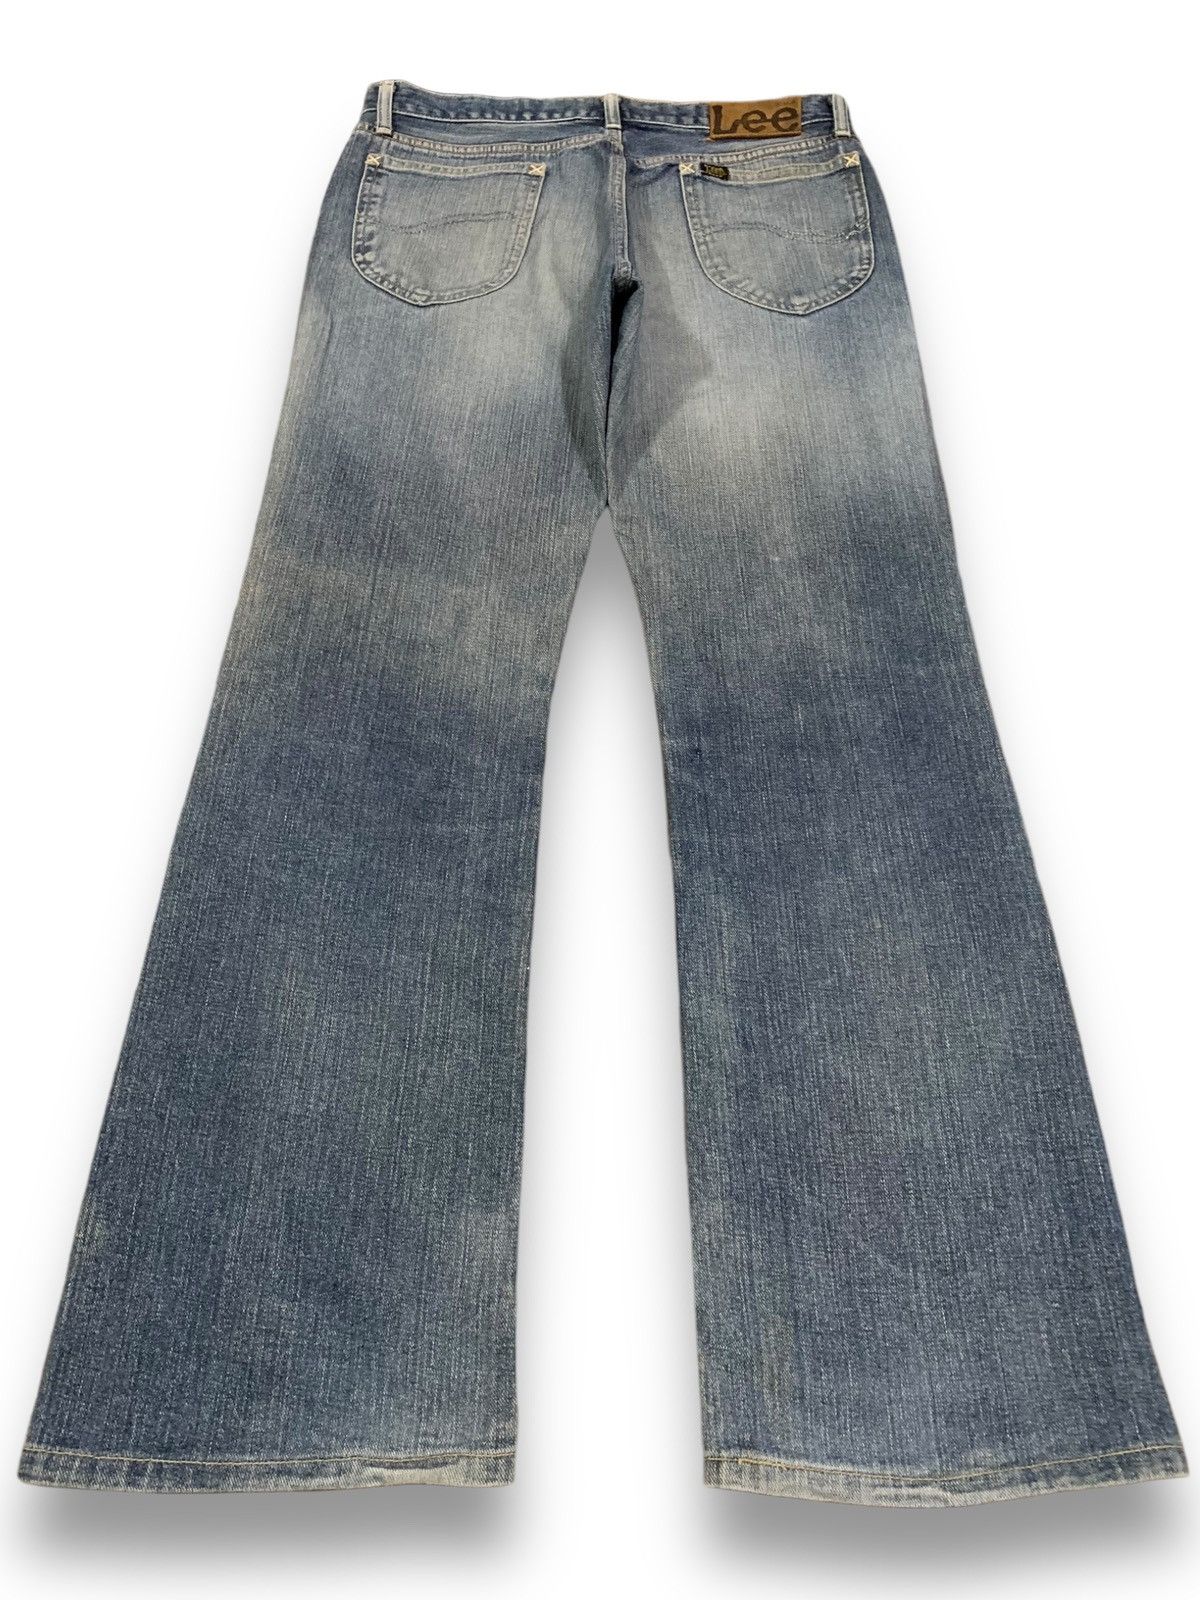 Lee Vintage Lee Cowboy Sanforized Distressed Flared Jeans Size US 31 - 2 Preview